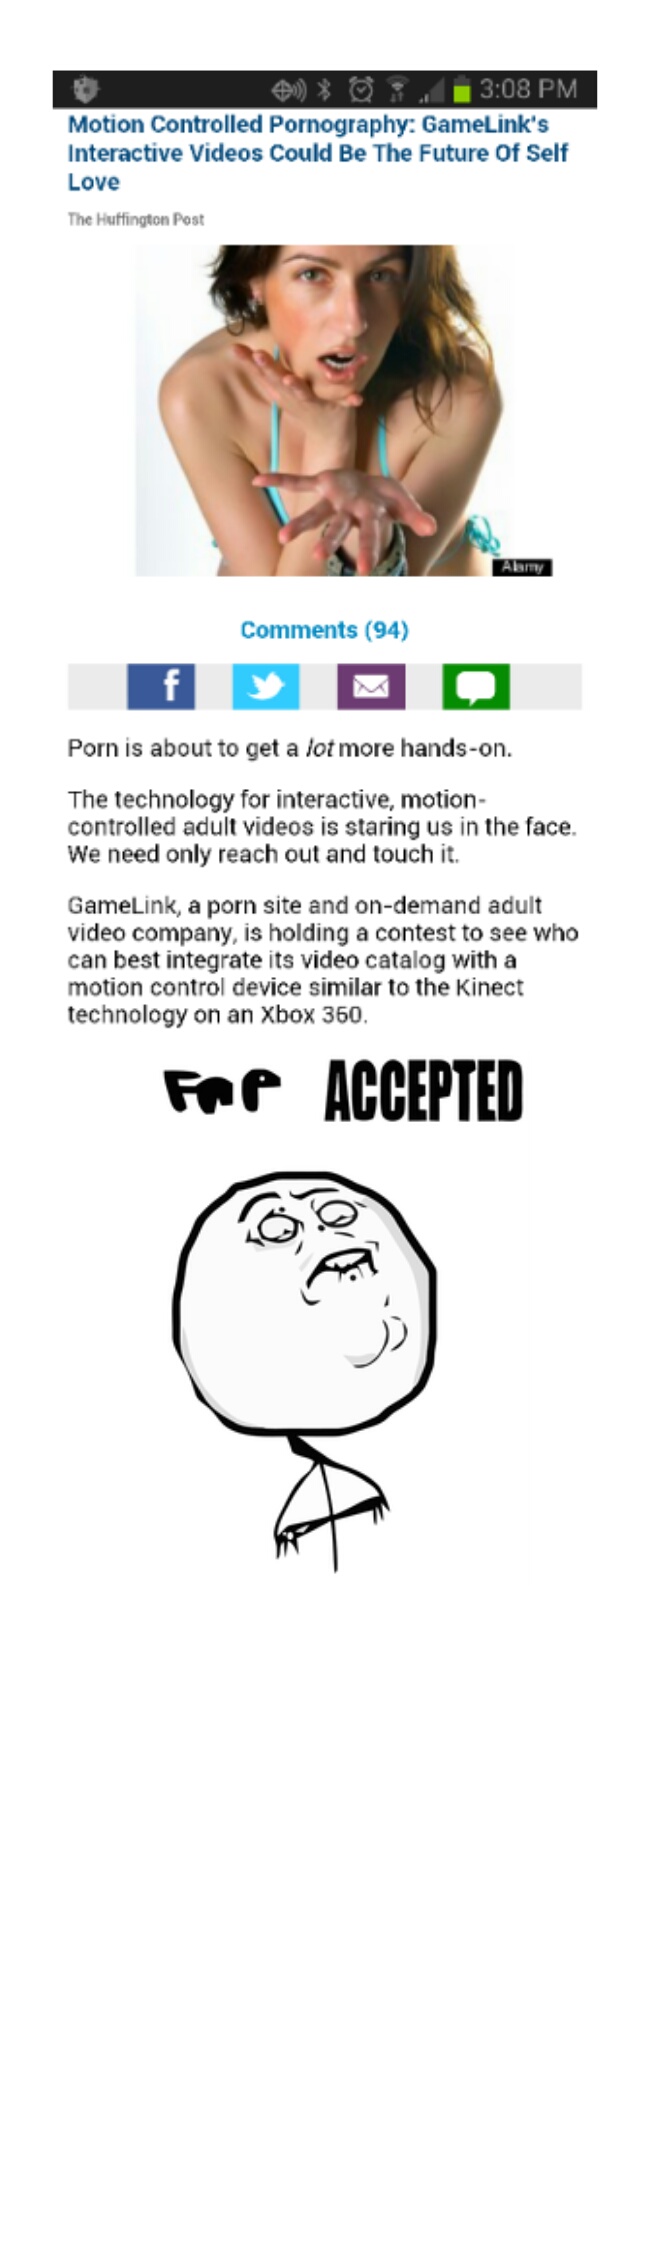 motion controlled porn - meme